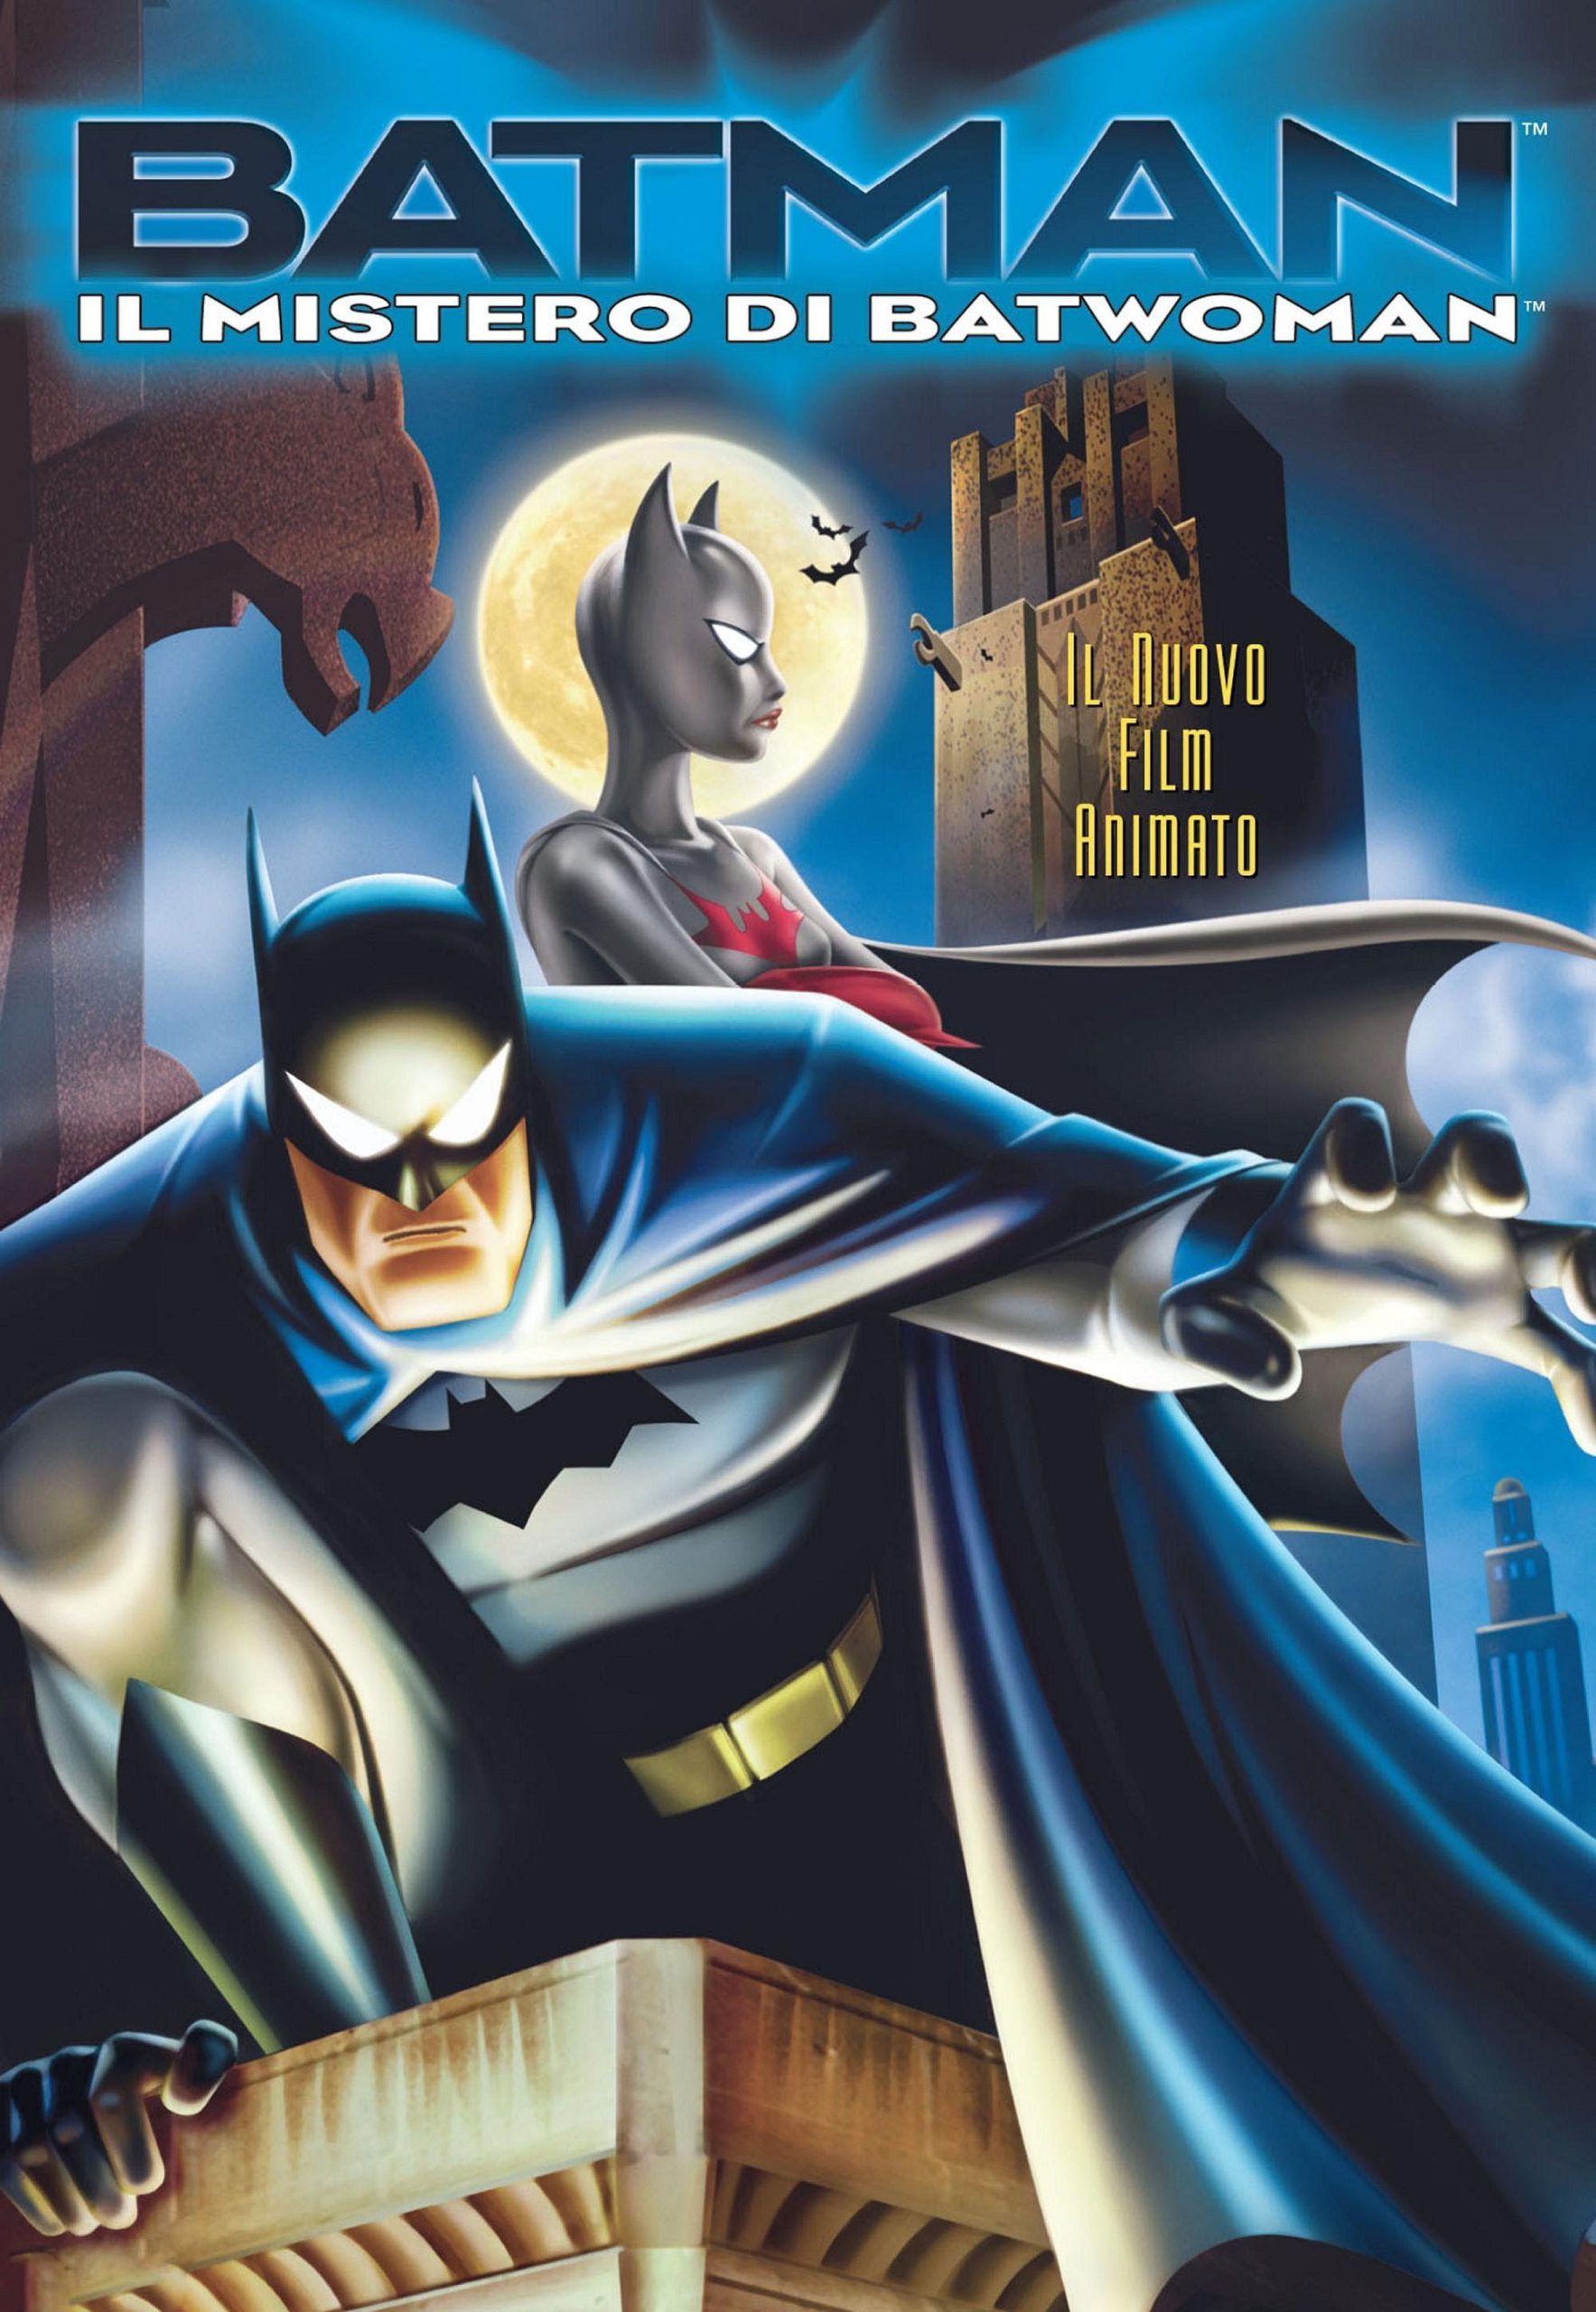 Batman – Il mistero di Batwoman [HD] (2003)